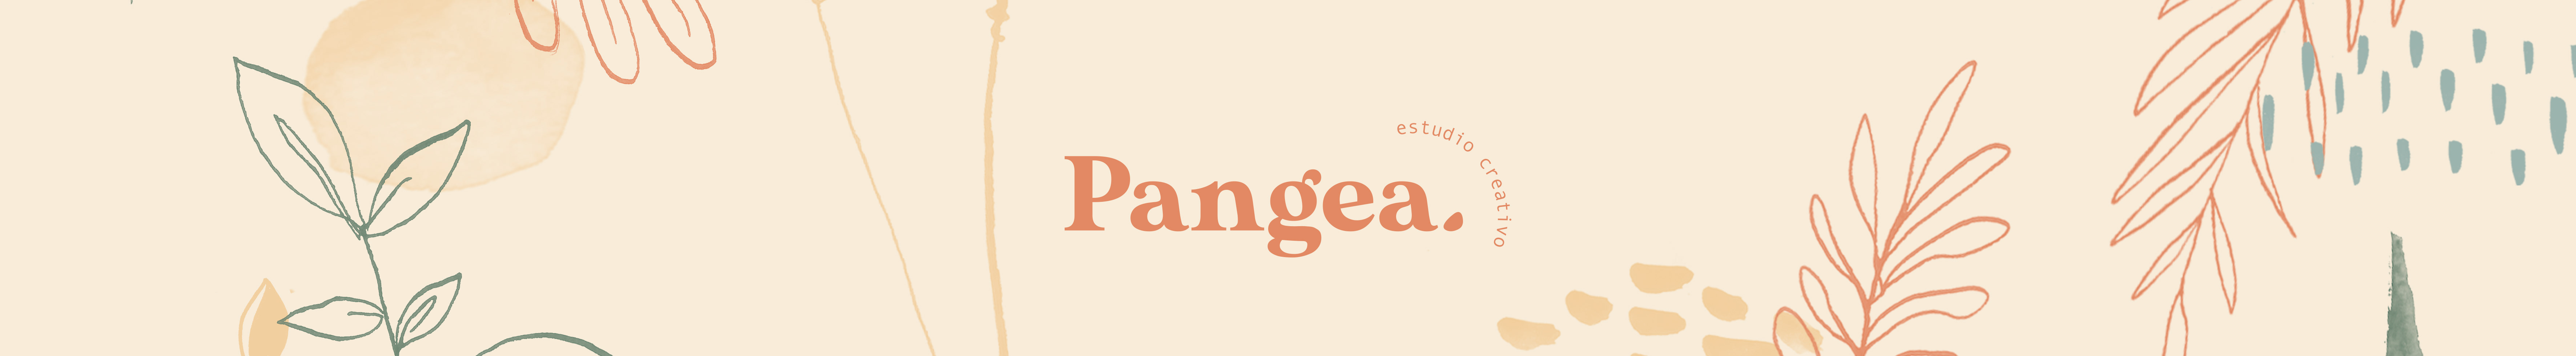 Pangea Estudio's profile banner